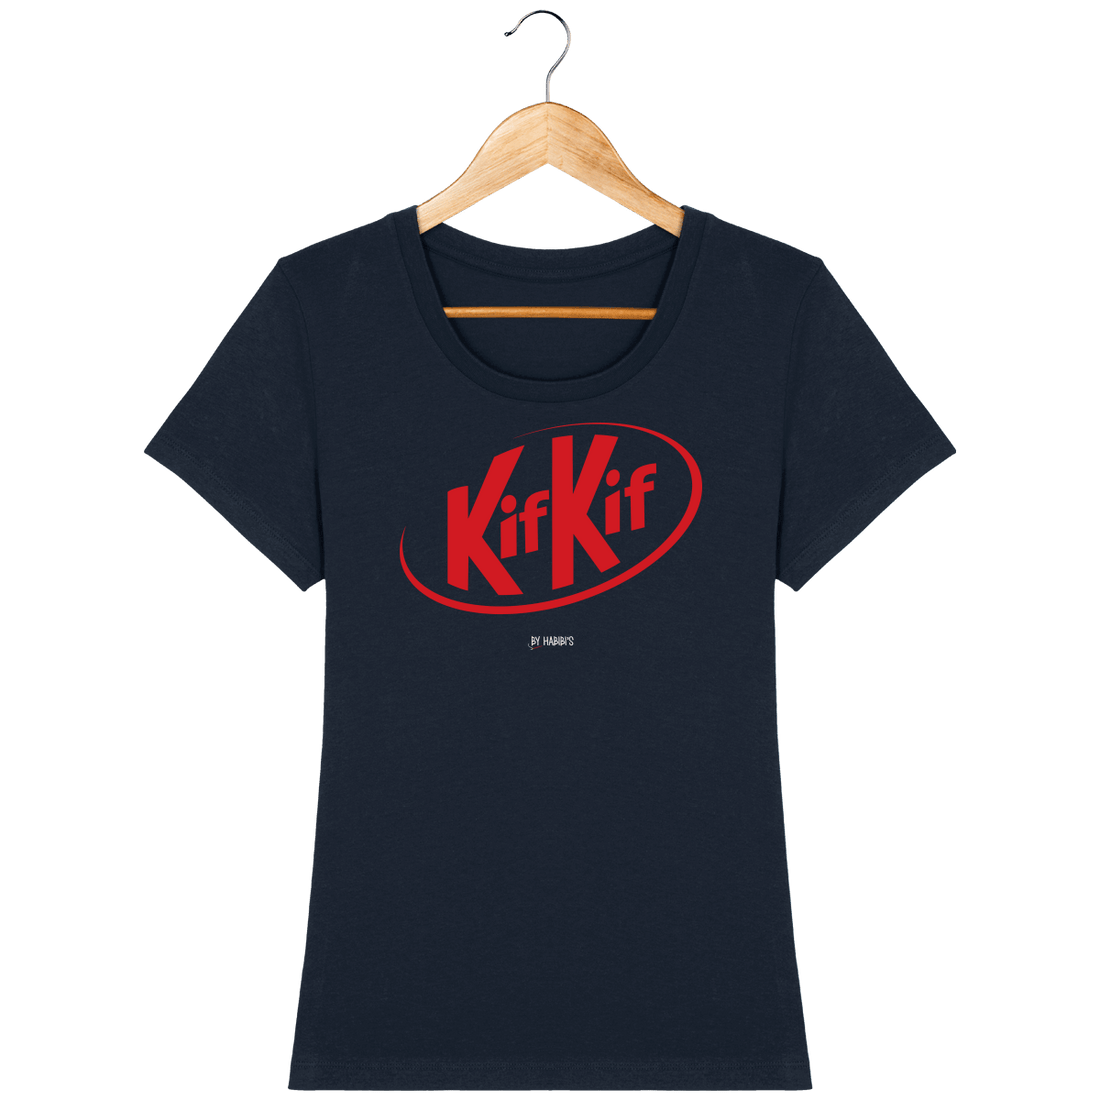 Femme>Tee-shirts - T-Shirt Femme <br> Kif Kif